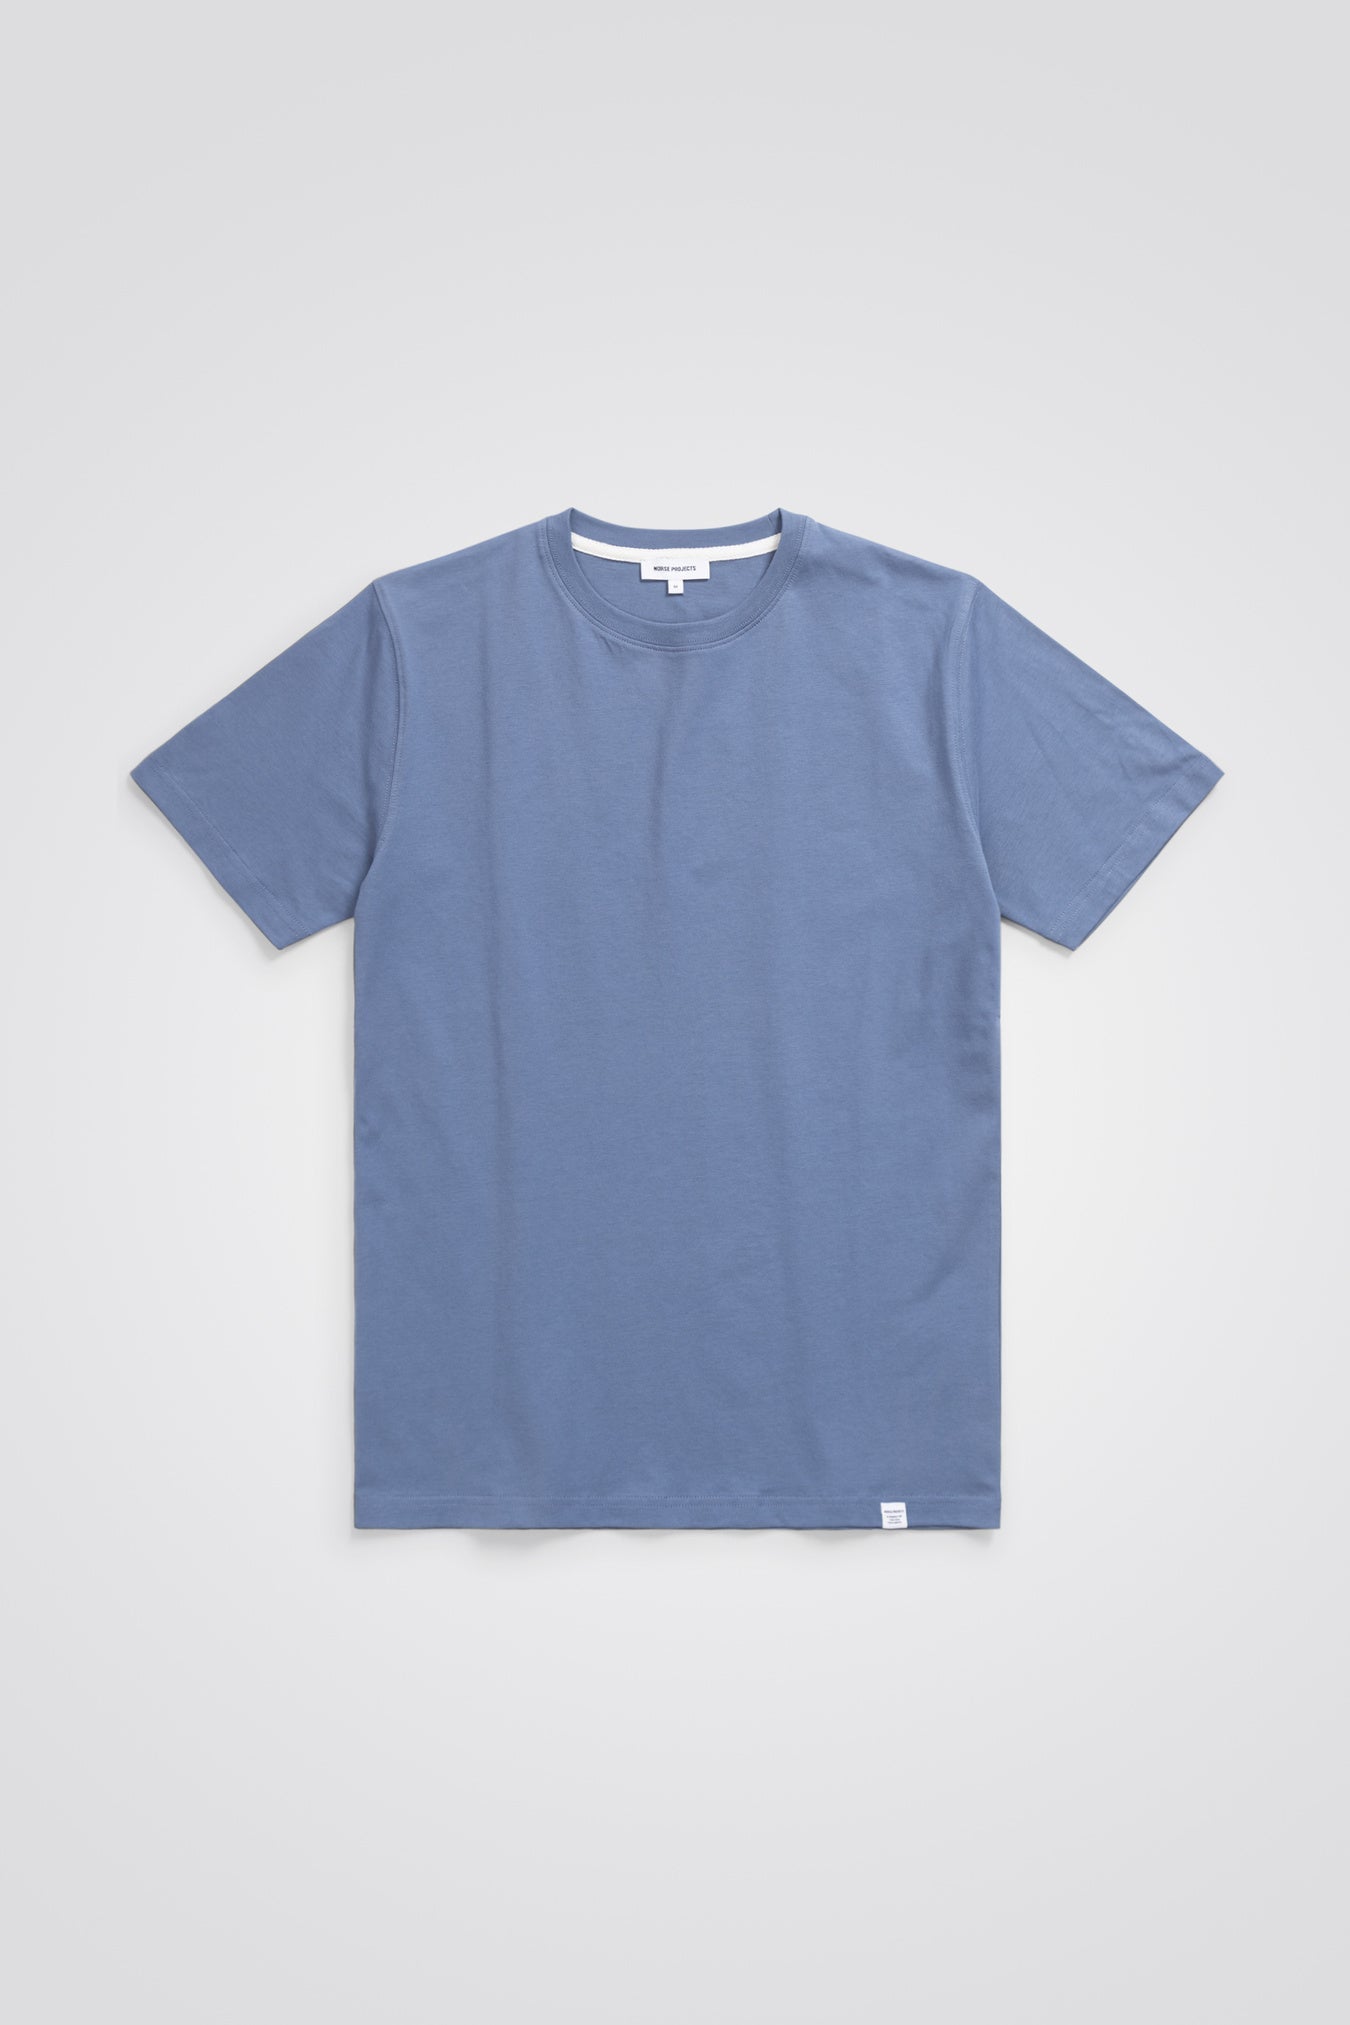 Niels Slim Organic T-Shirt - Norse Projects - Danali - N01-0559-LightStoneBlue-M